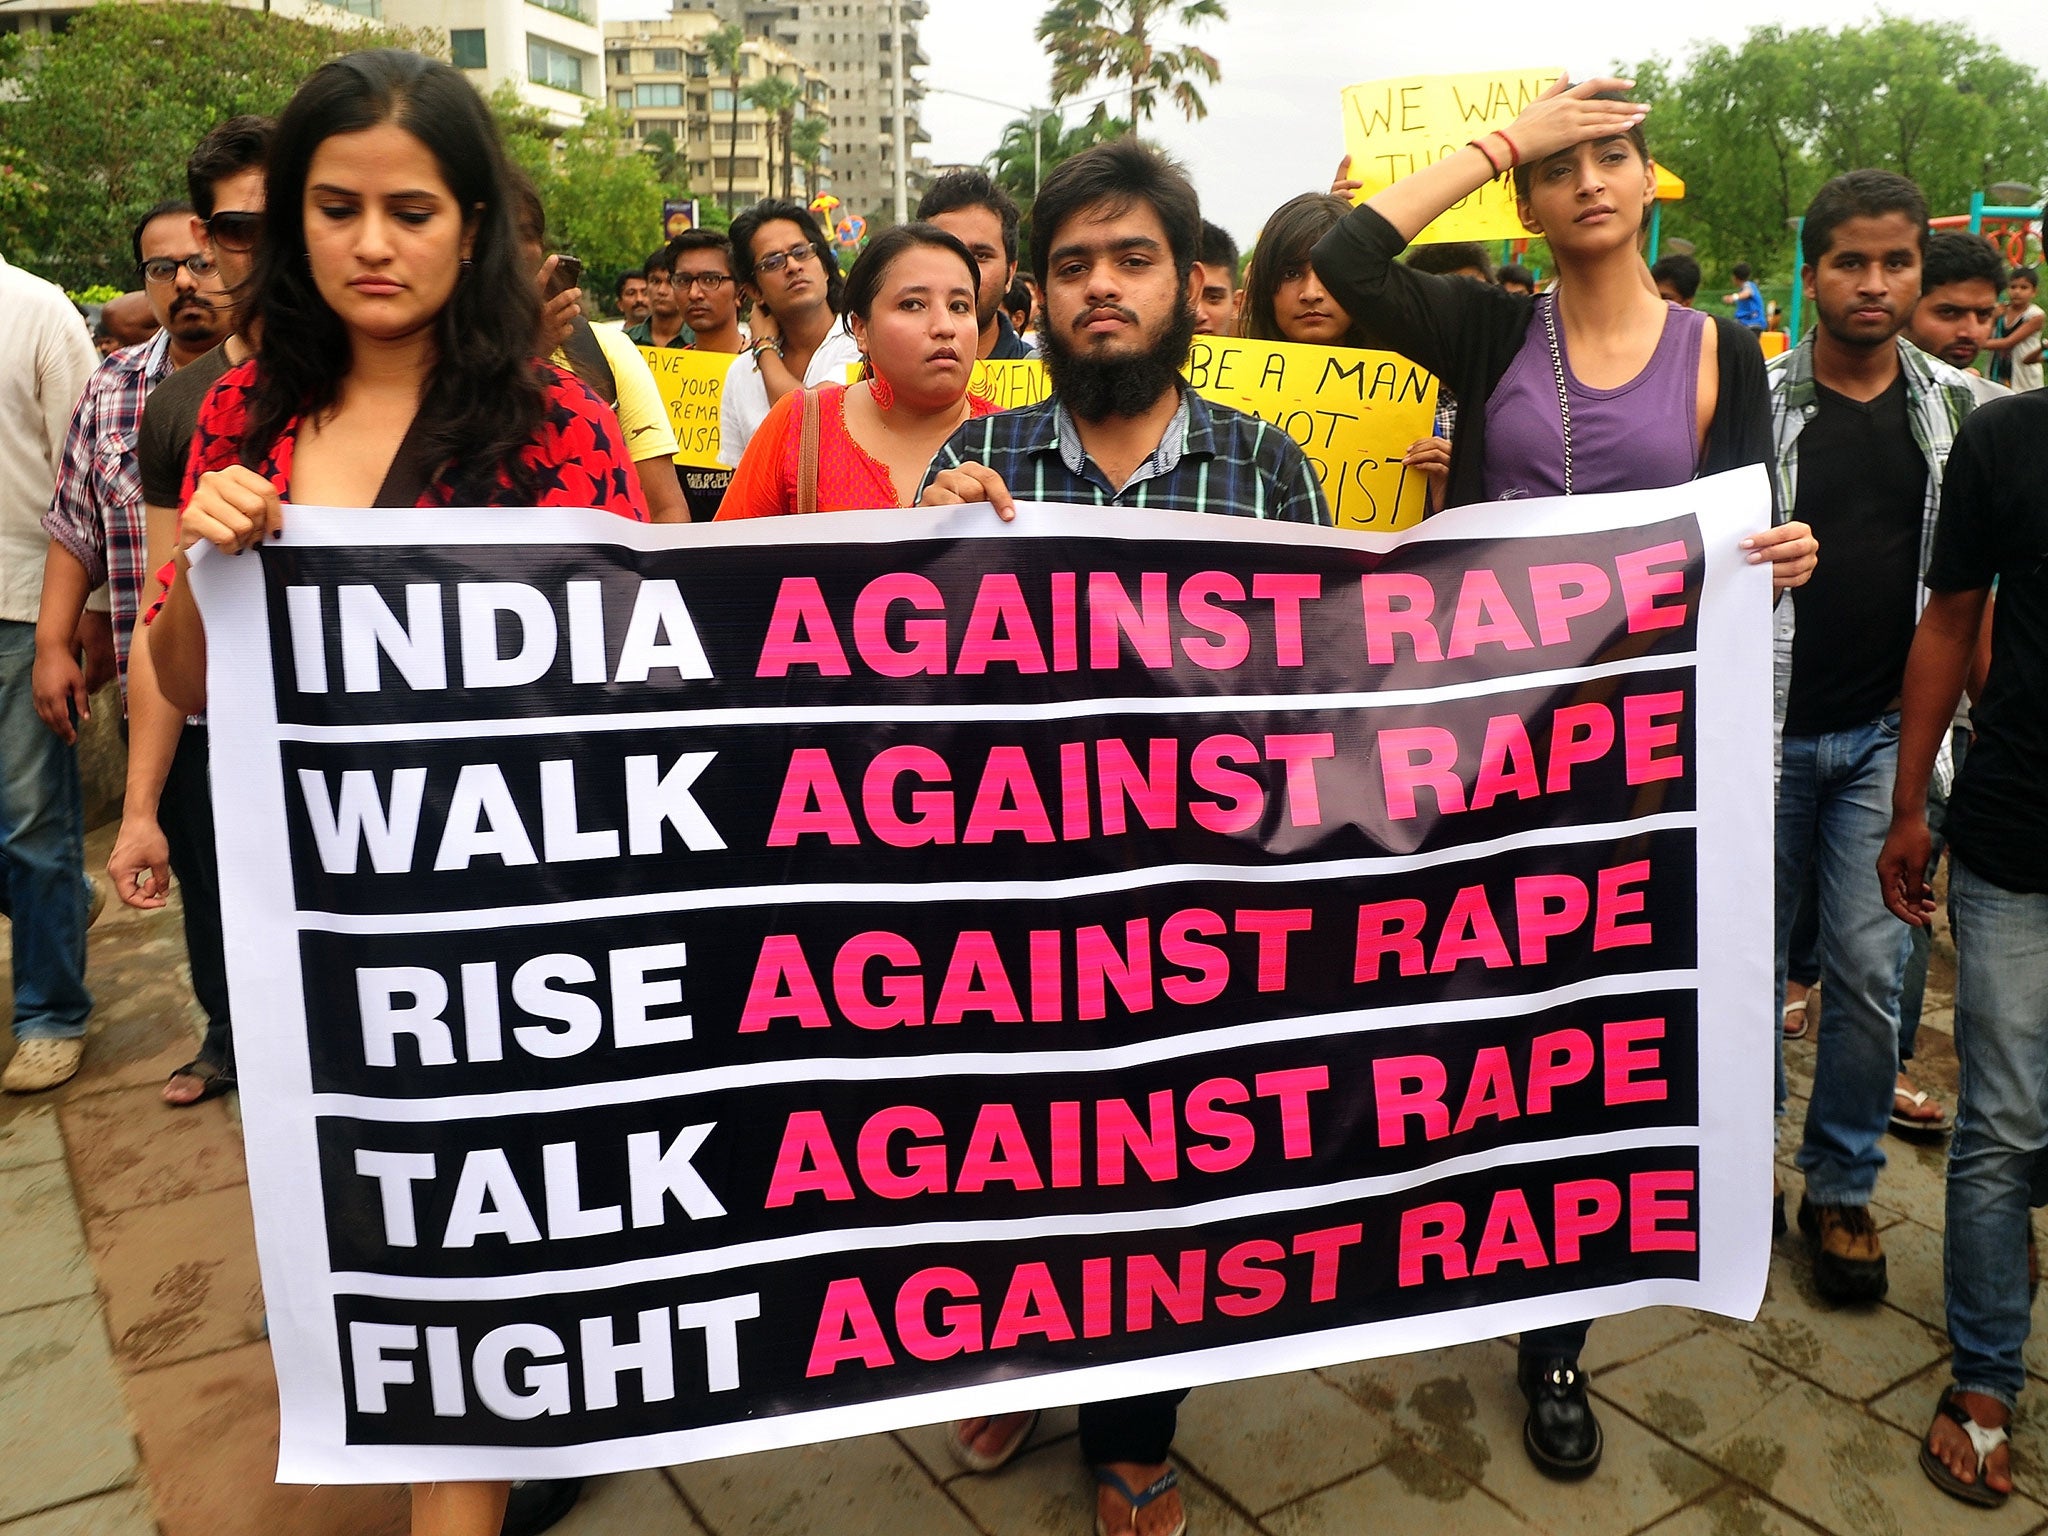 The 2012 gang-rape of Jyoti Singh on a Delhi bus raised worldwide awareness of India's culture of rape